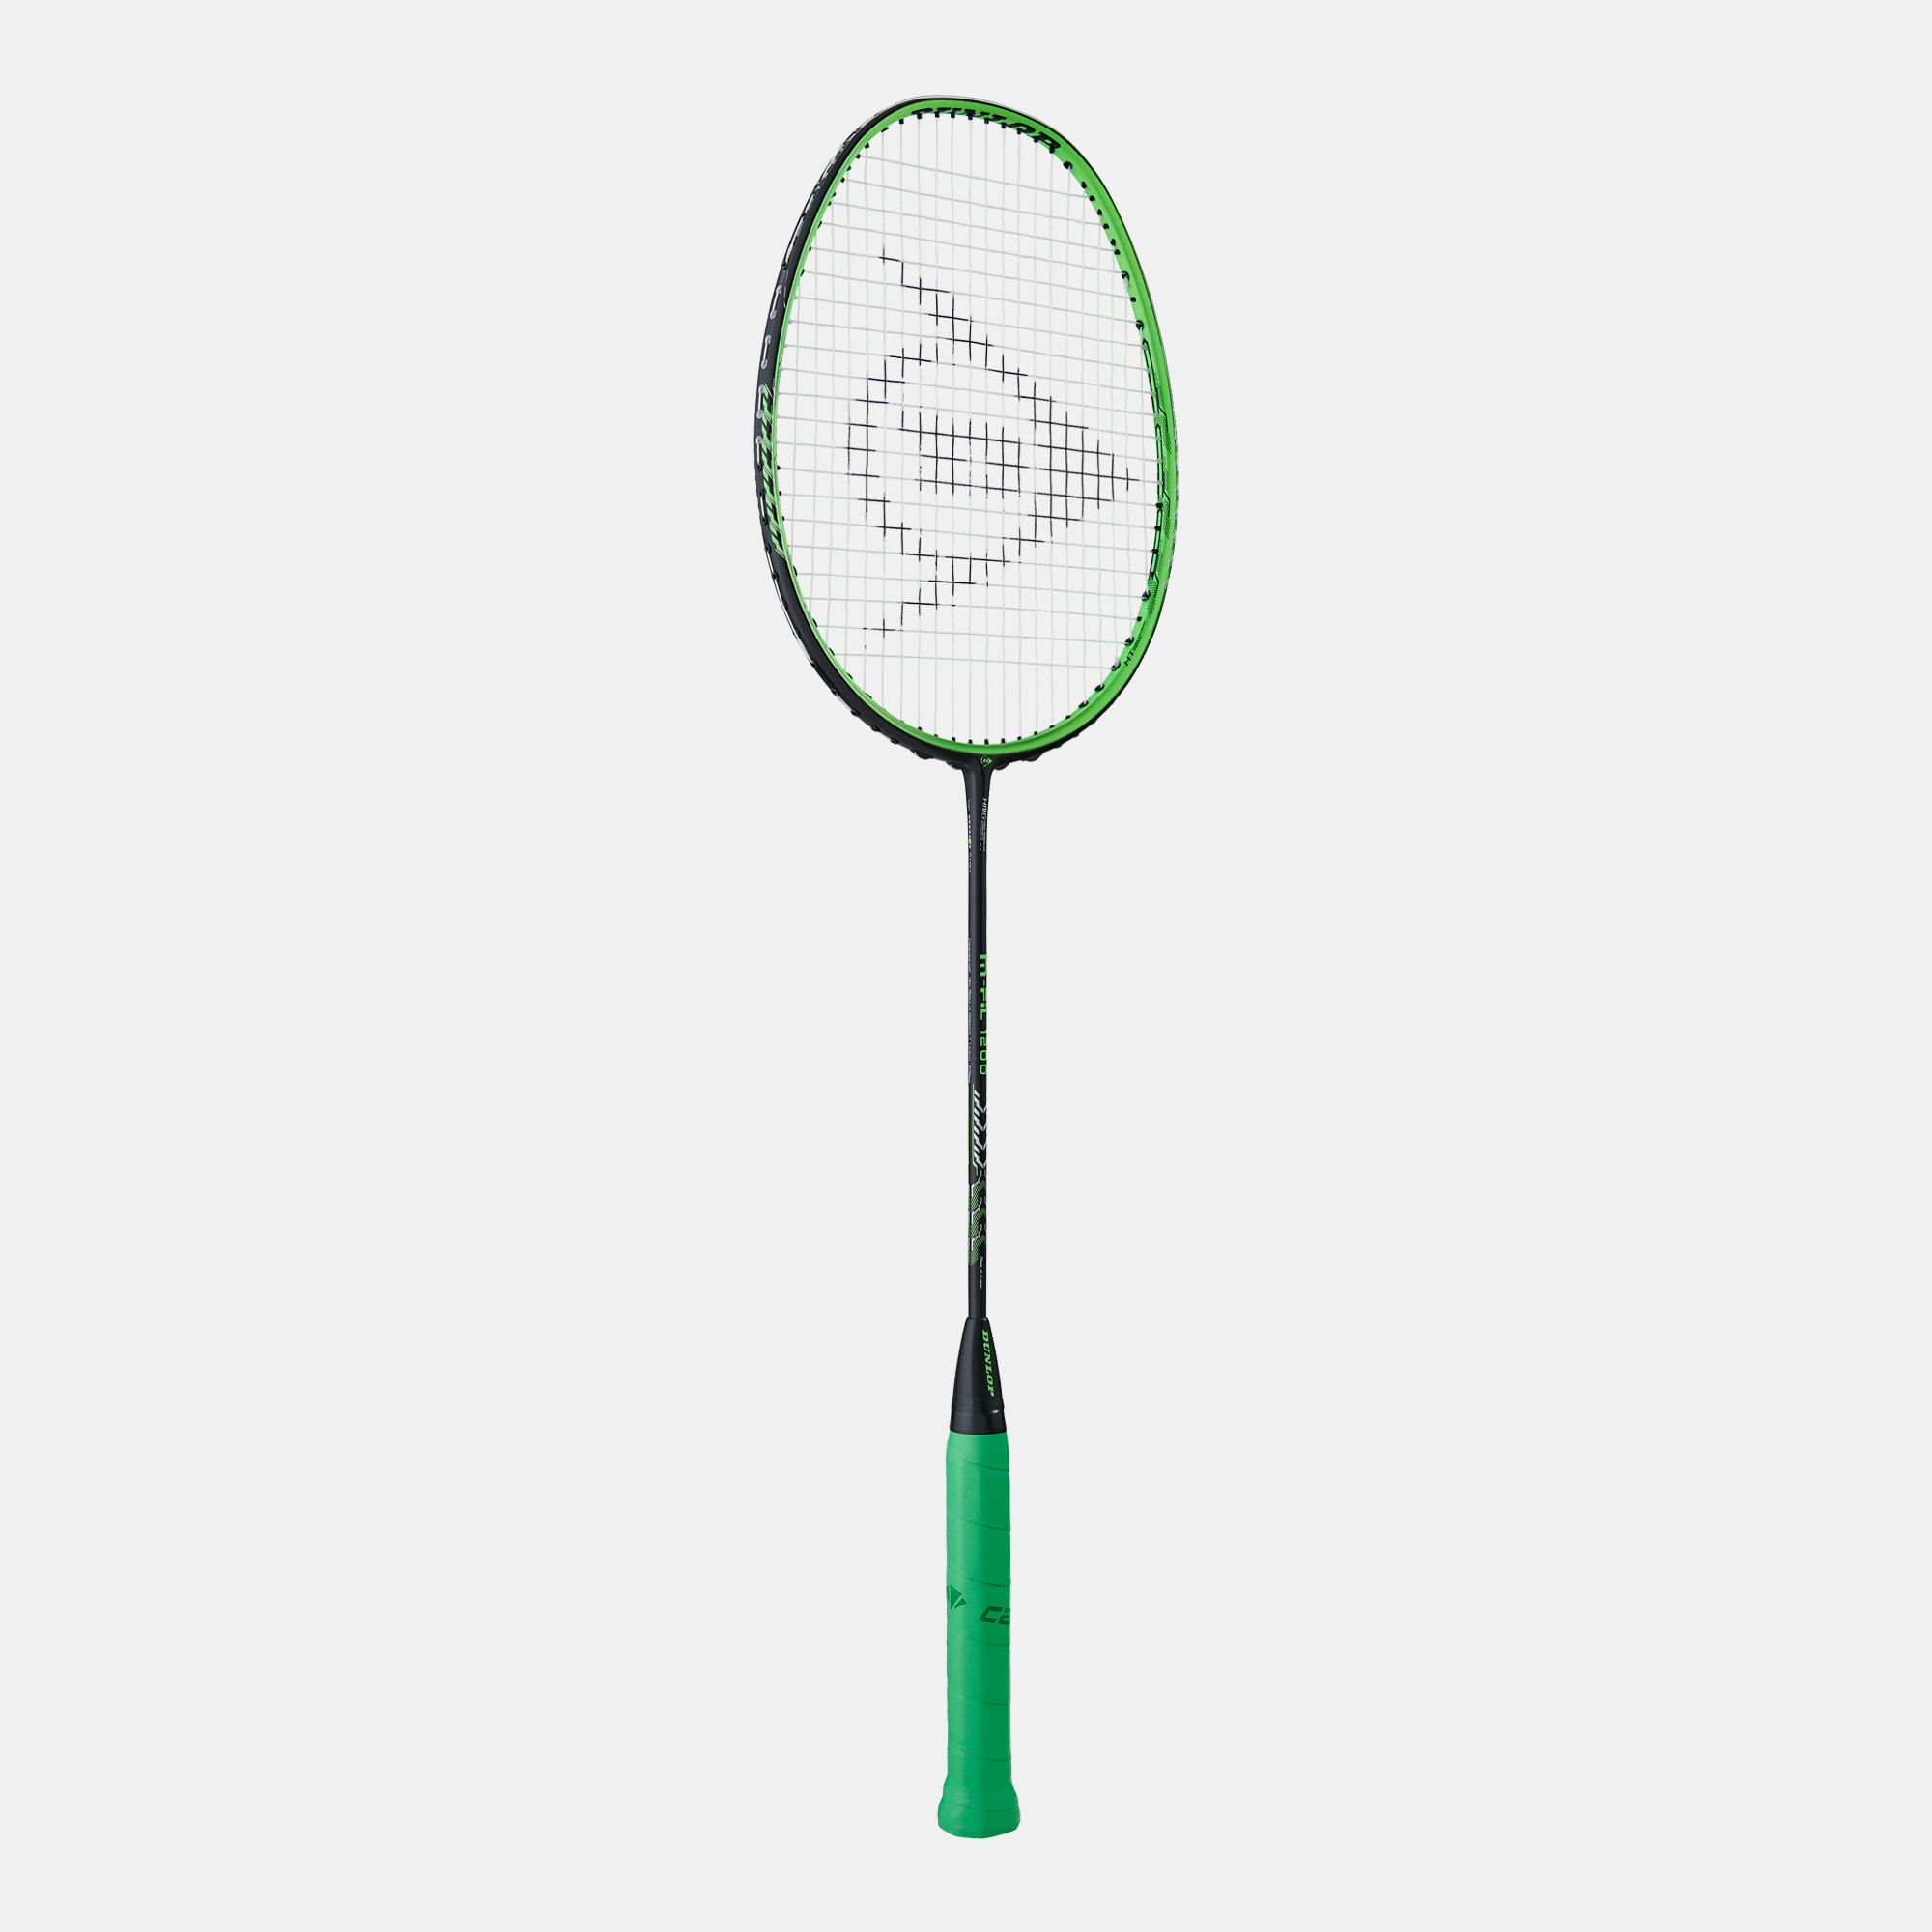 Dunlop M-FIL 1200 G1 Badminton Racket 